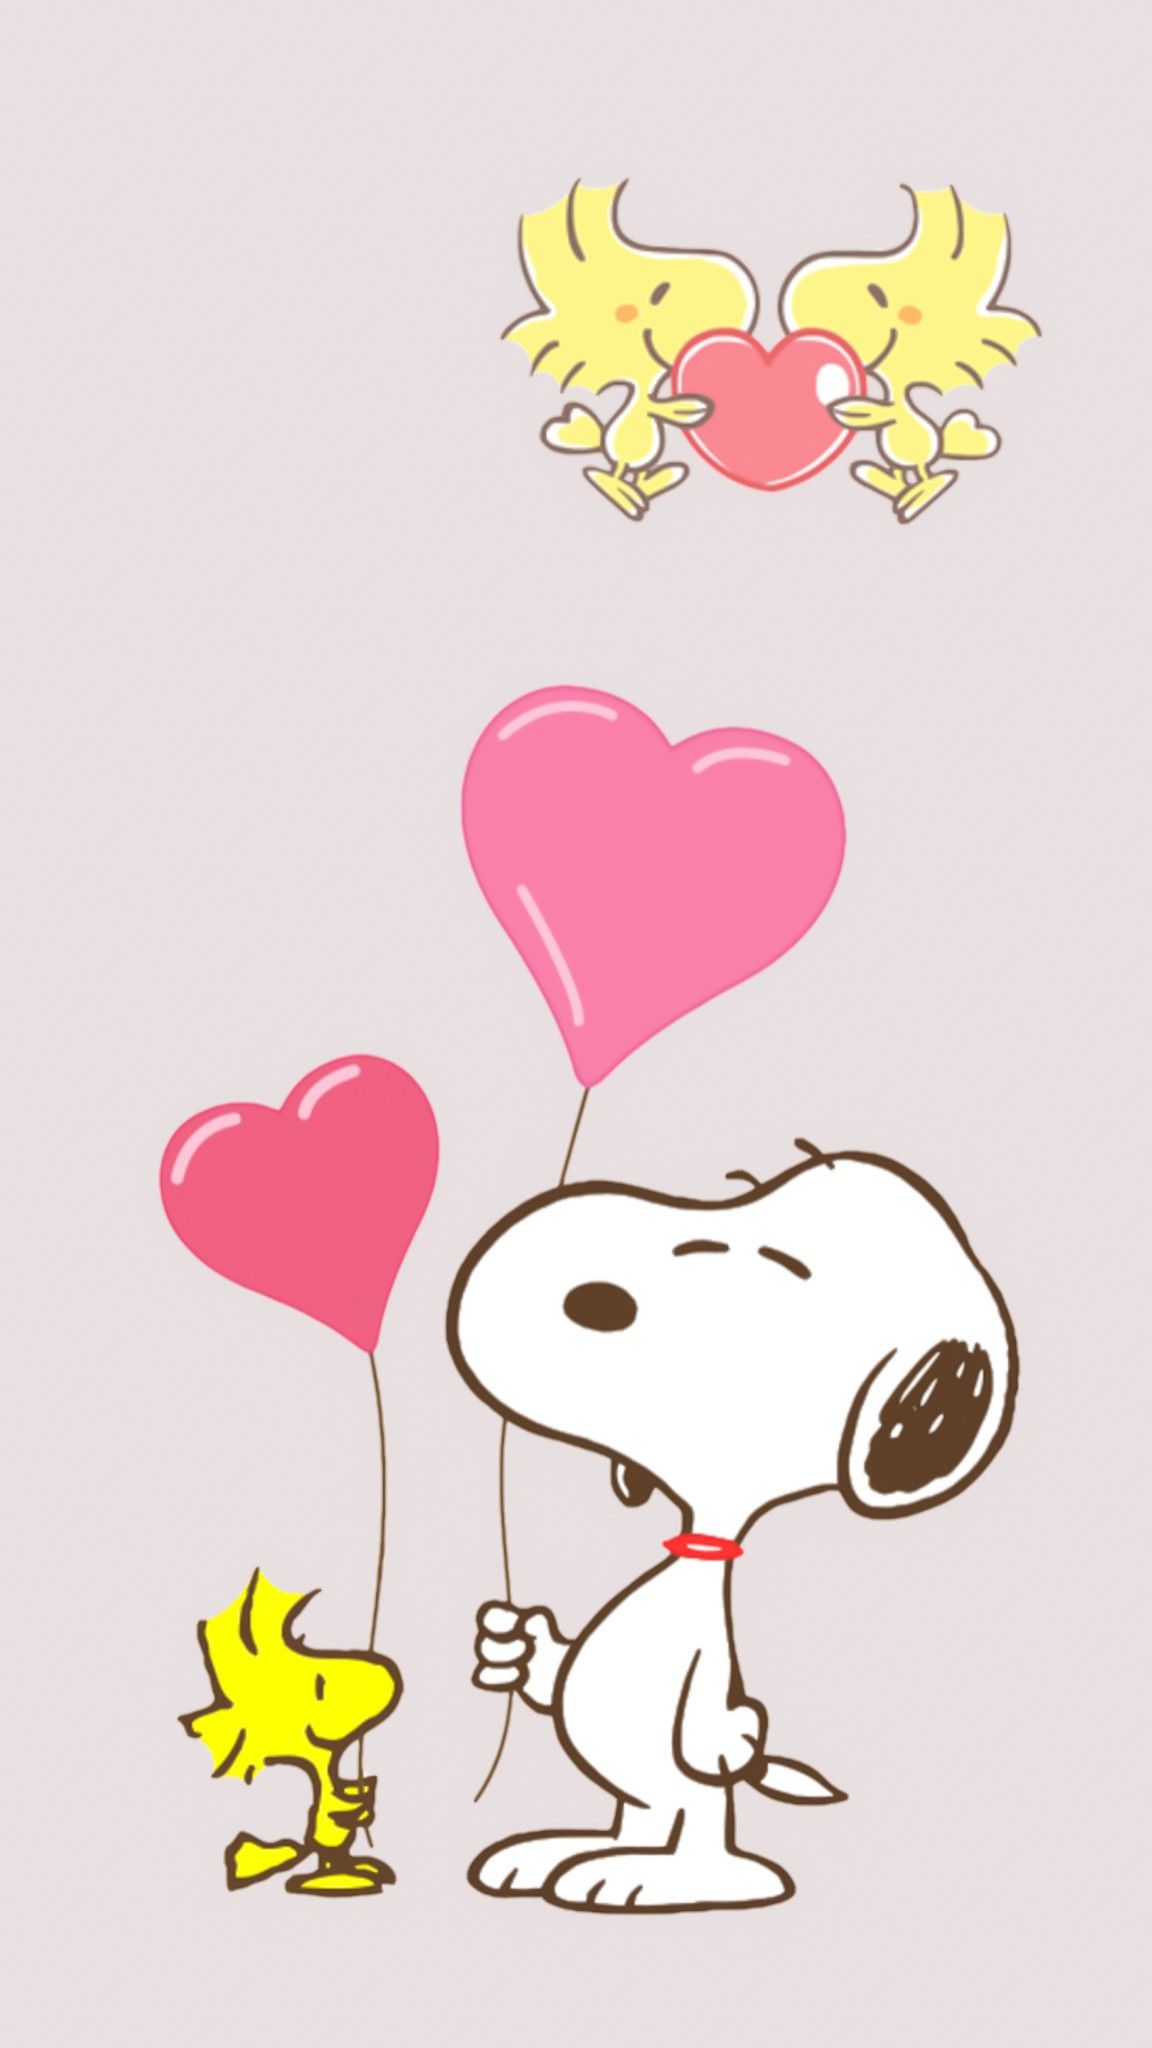 Snoopy. Snoopy wallpaper, Snoopy love, Snoopy valentine's day